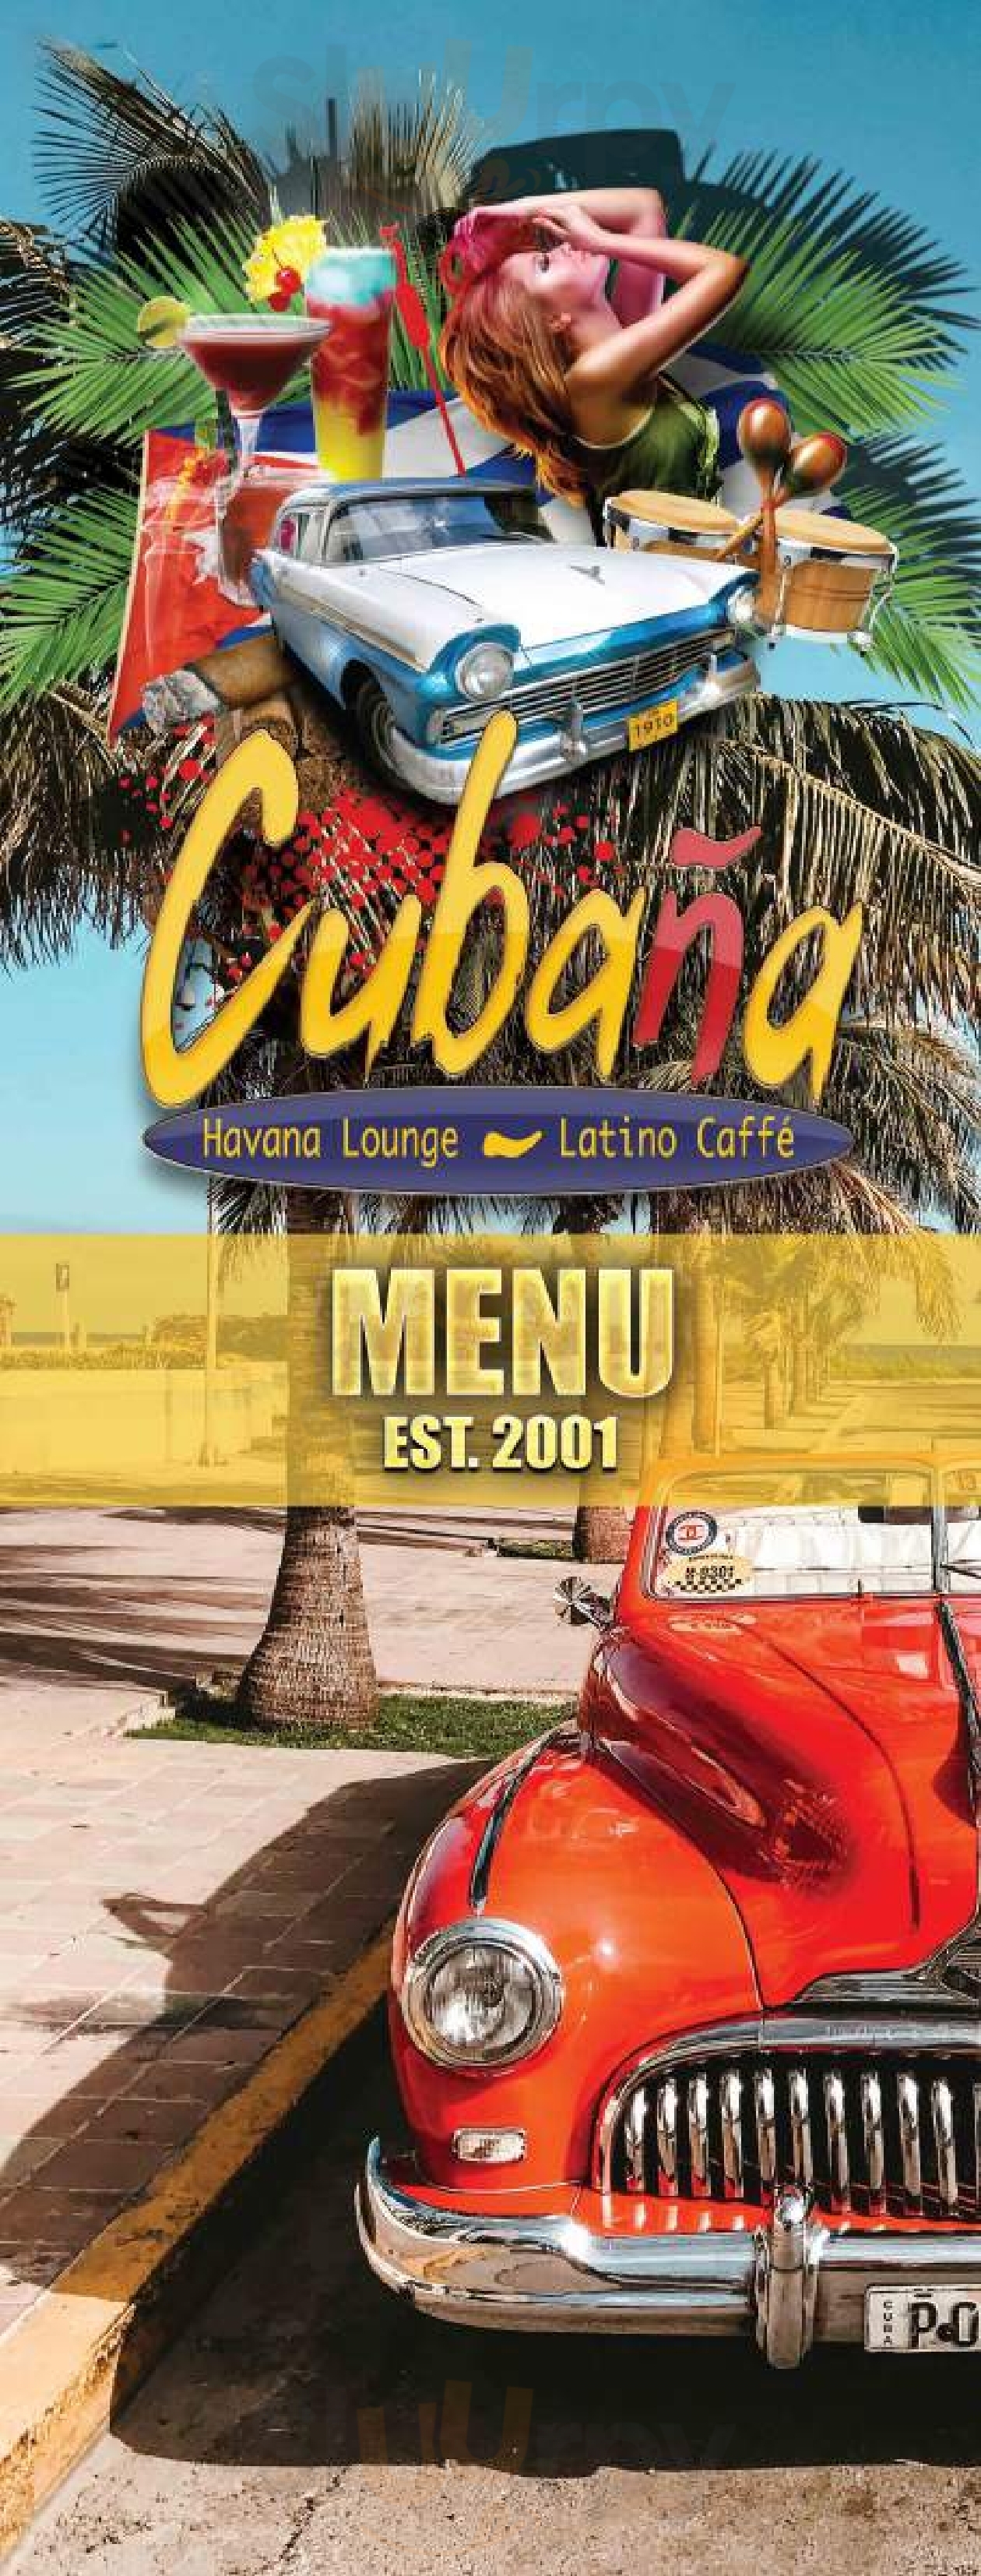 Cubana Havana Lounge & Latino Caffe Cape Town Central Menu - 1